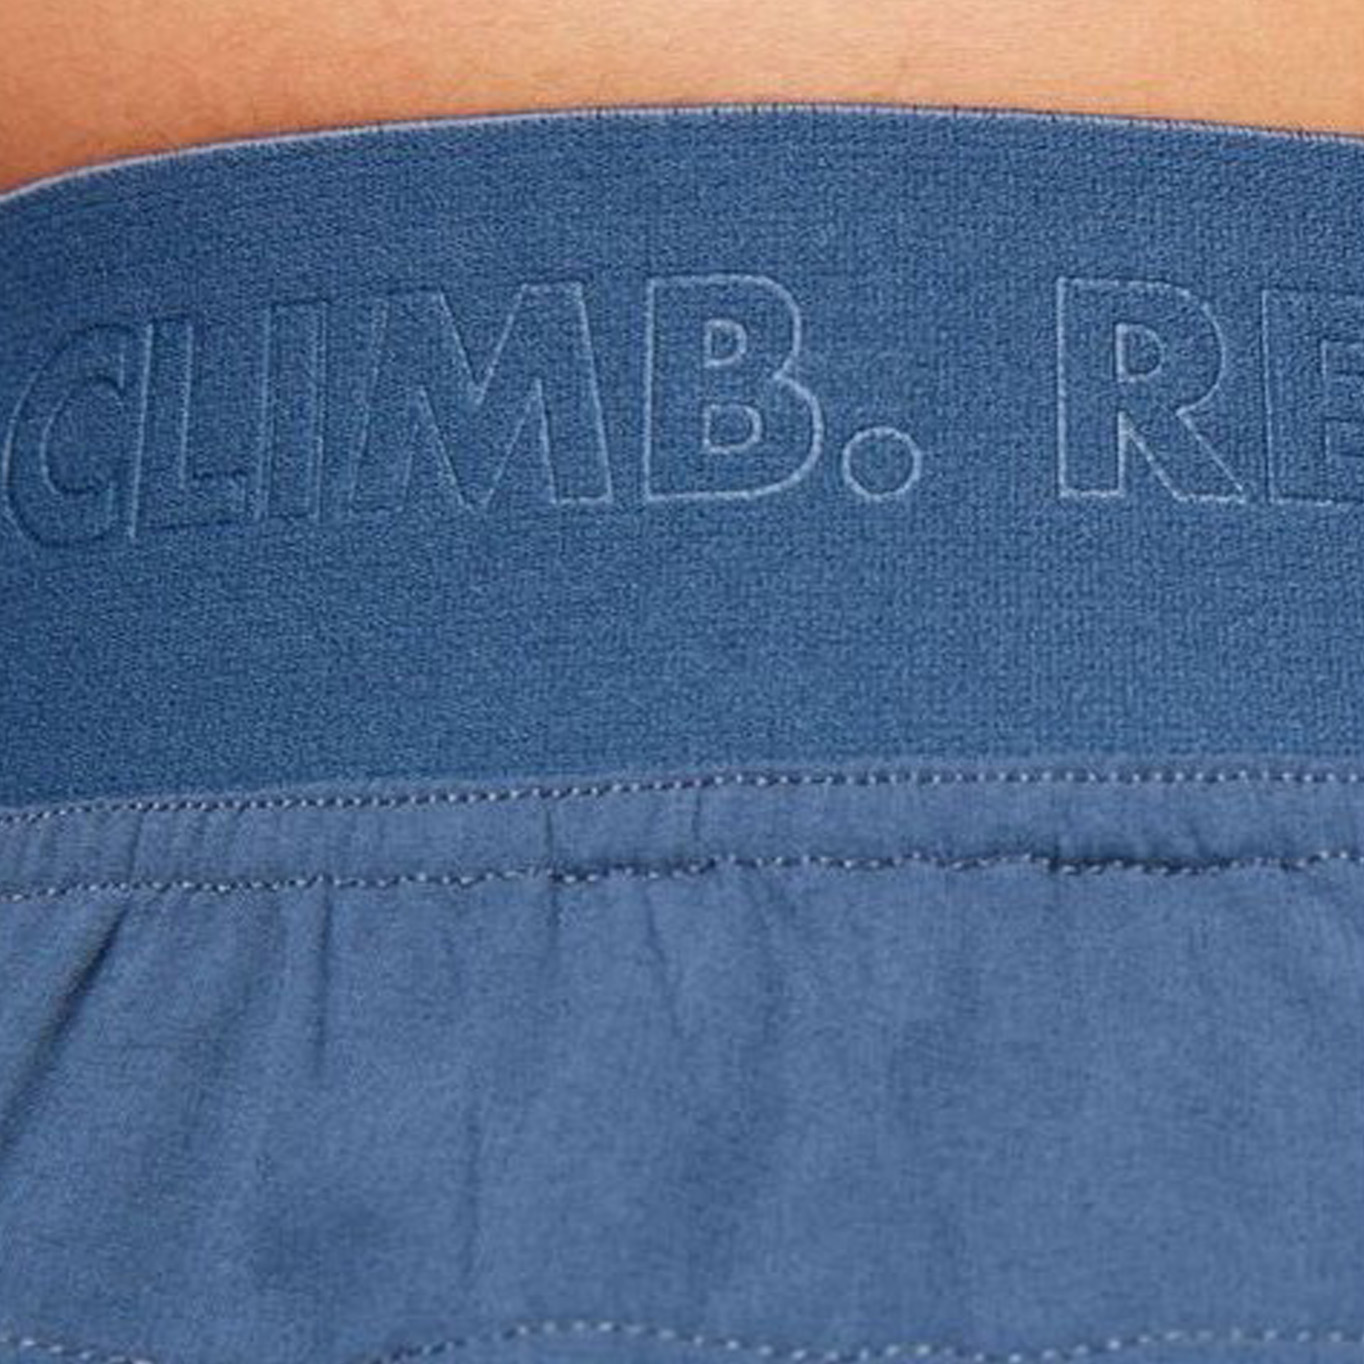 Black Diamond Sierra Men's Rock Climbing Shorts